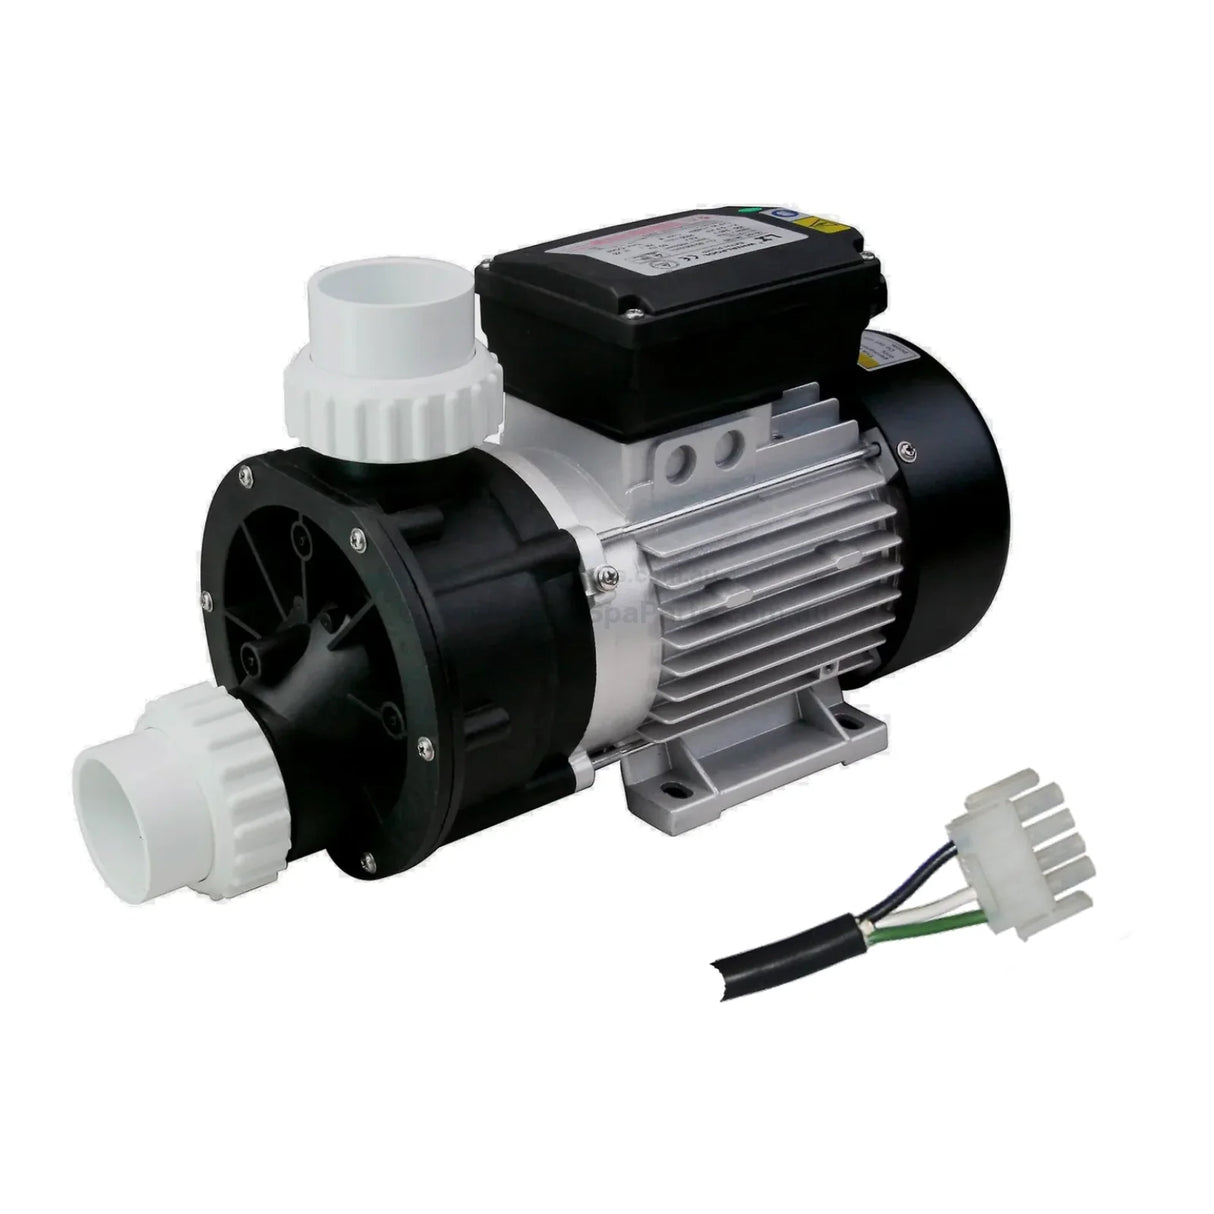 Lx Whirlpool Ja50 Spa Circulation Pump 0.5Hp 375W Amp Plug - Circulation / Filtration Pumps